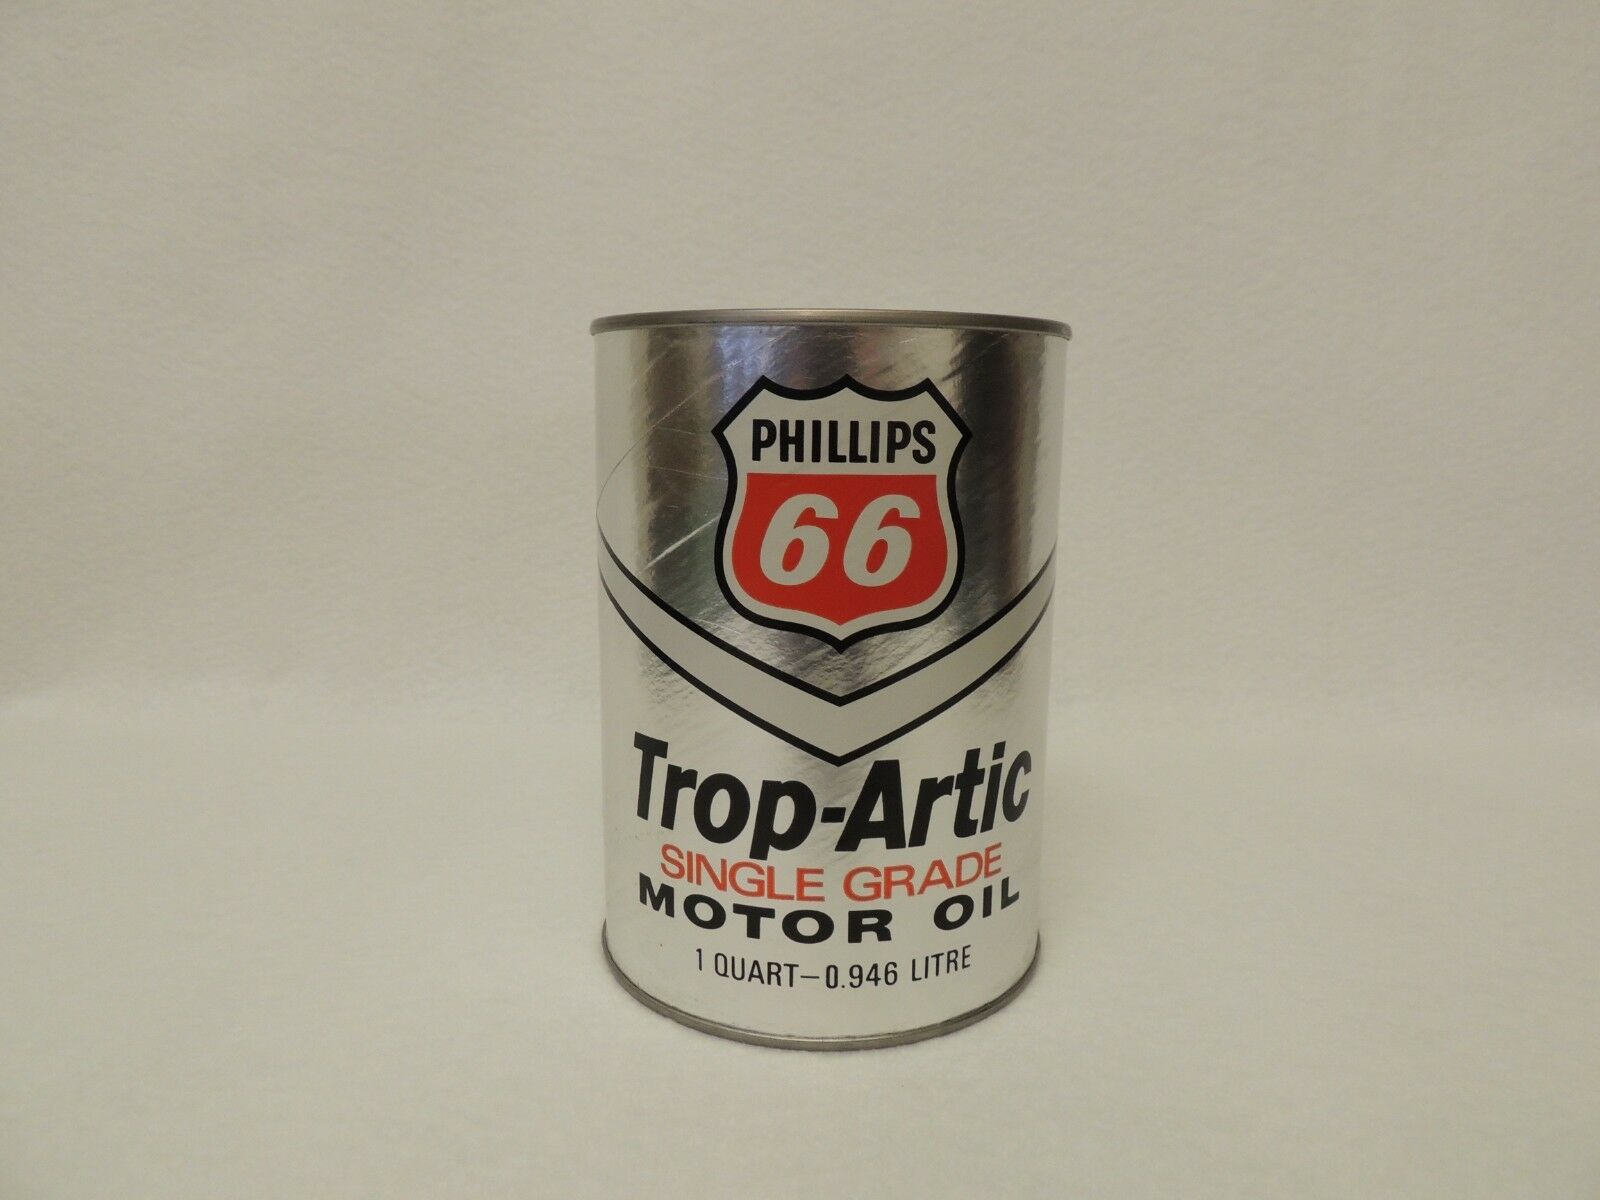 Vintage Phillips 66 Trop-artic 1 Quart Oil Can - Full